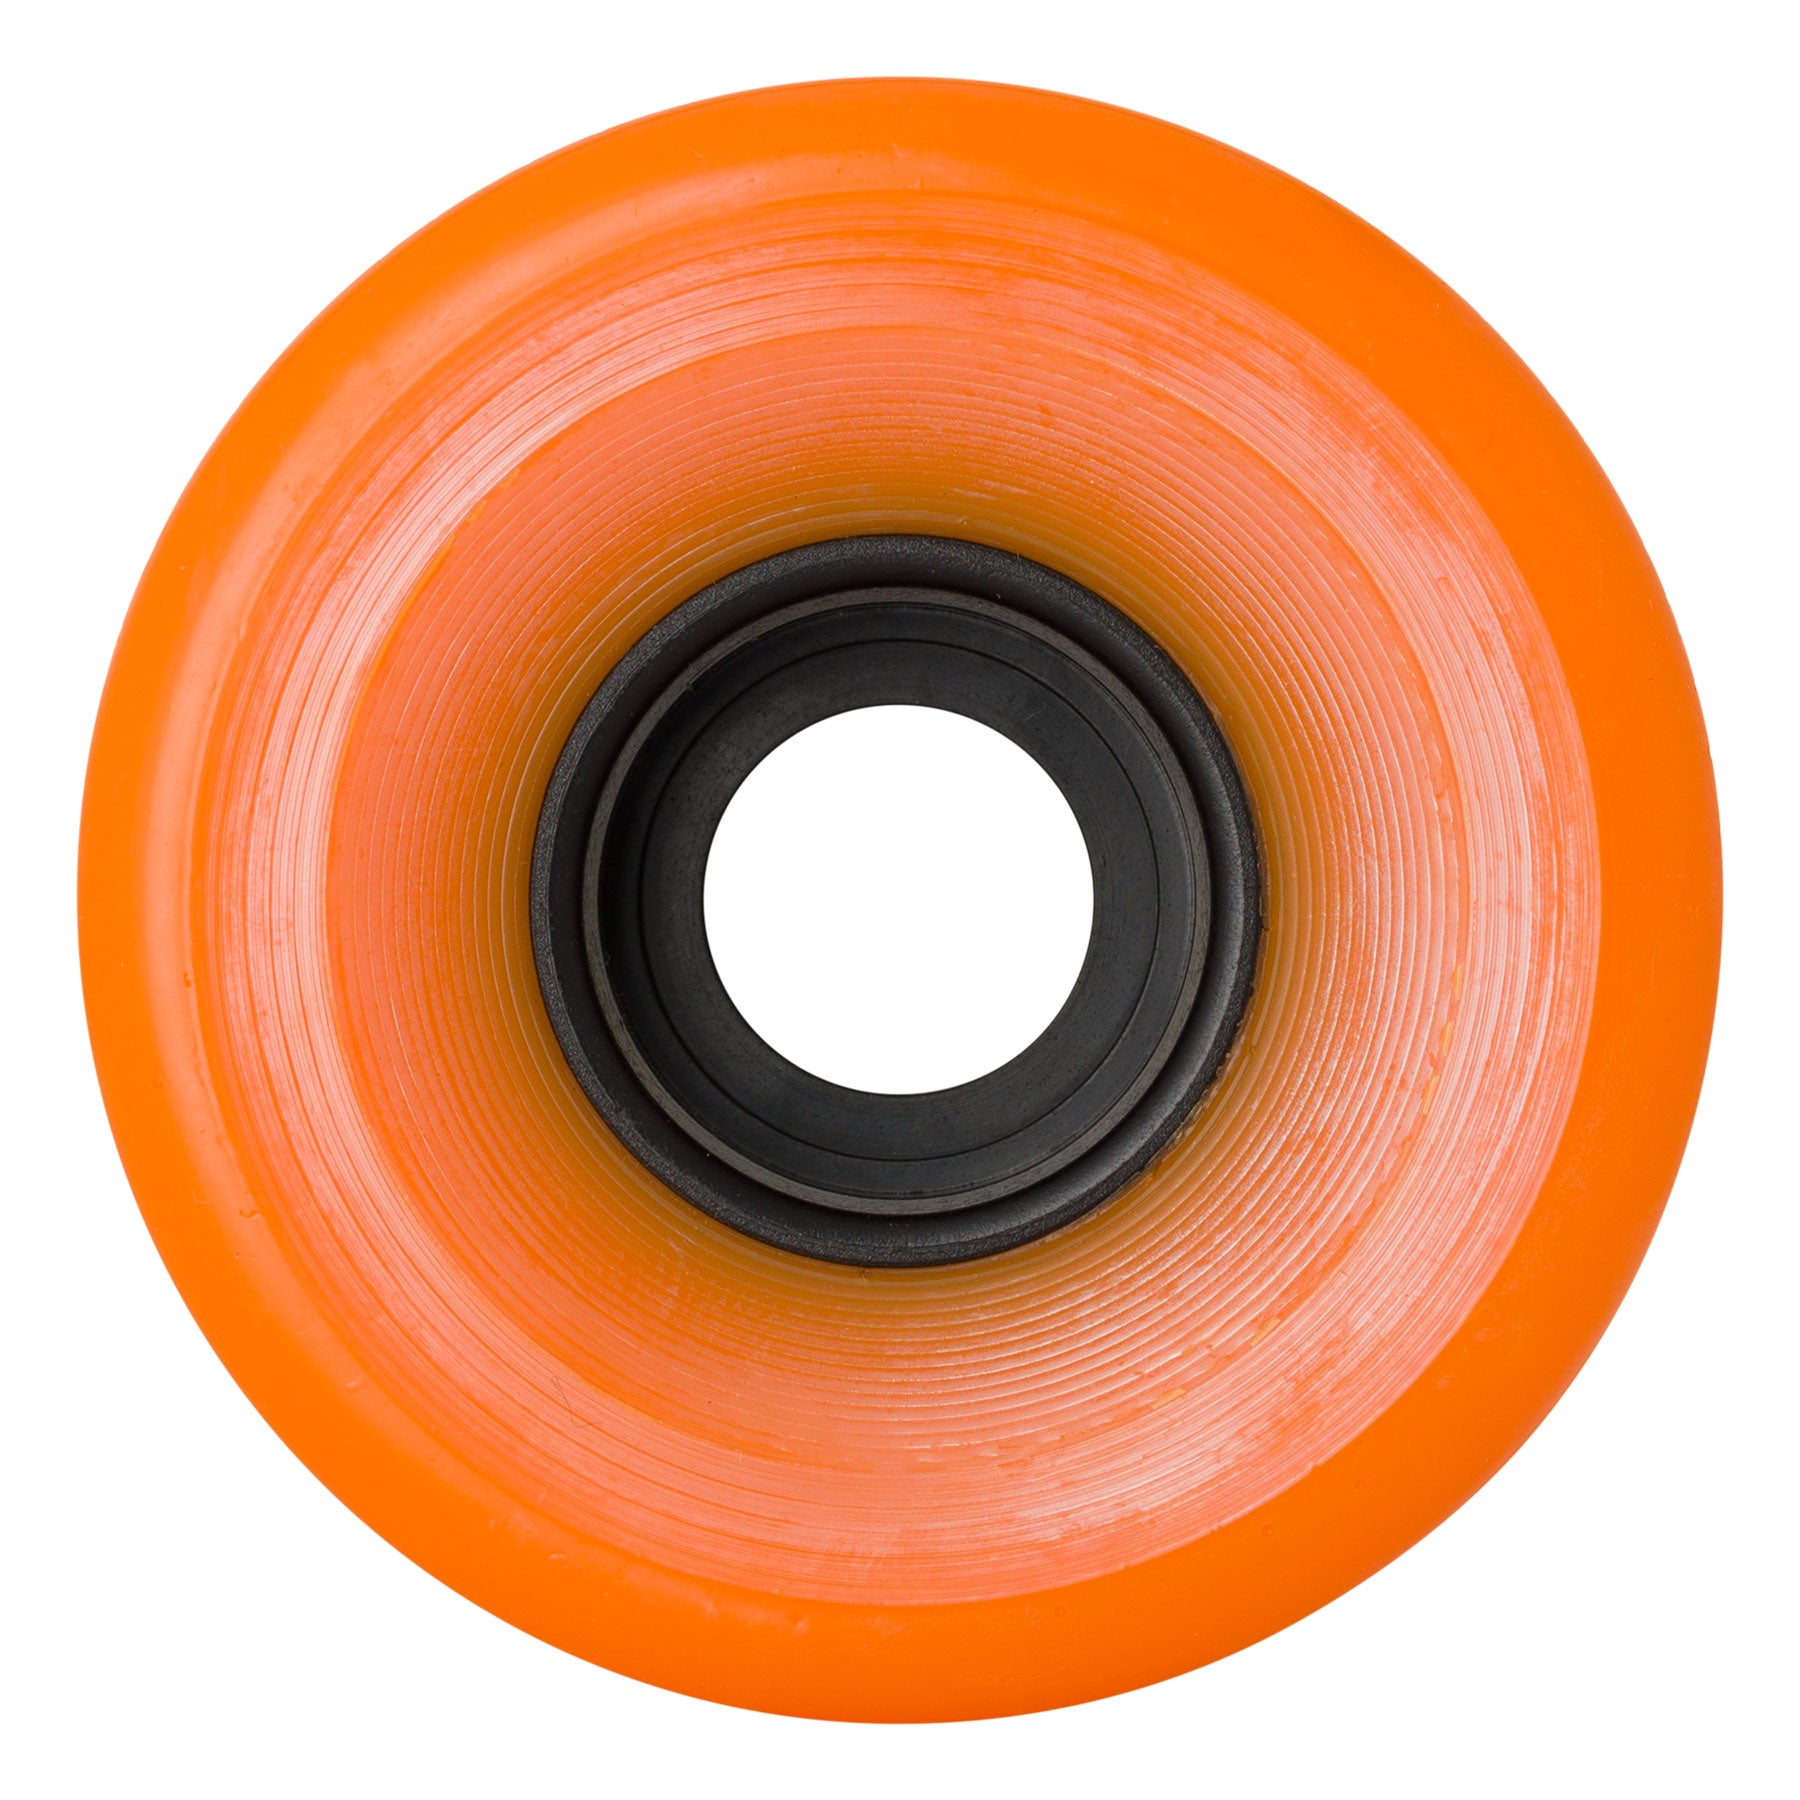 OJ Wheels Super Juice Orange/Yellow Logo 87A 60mm